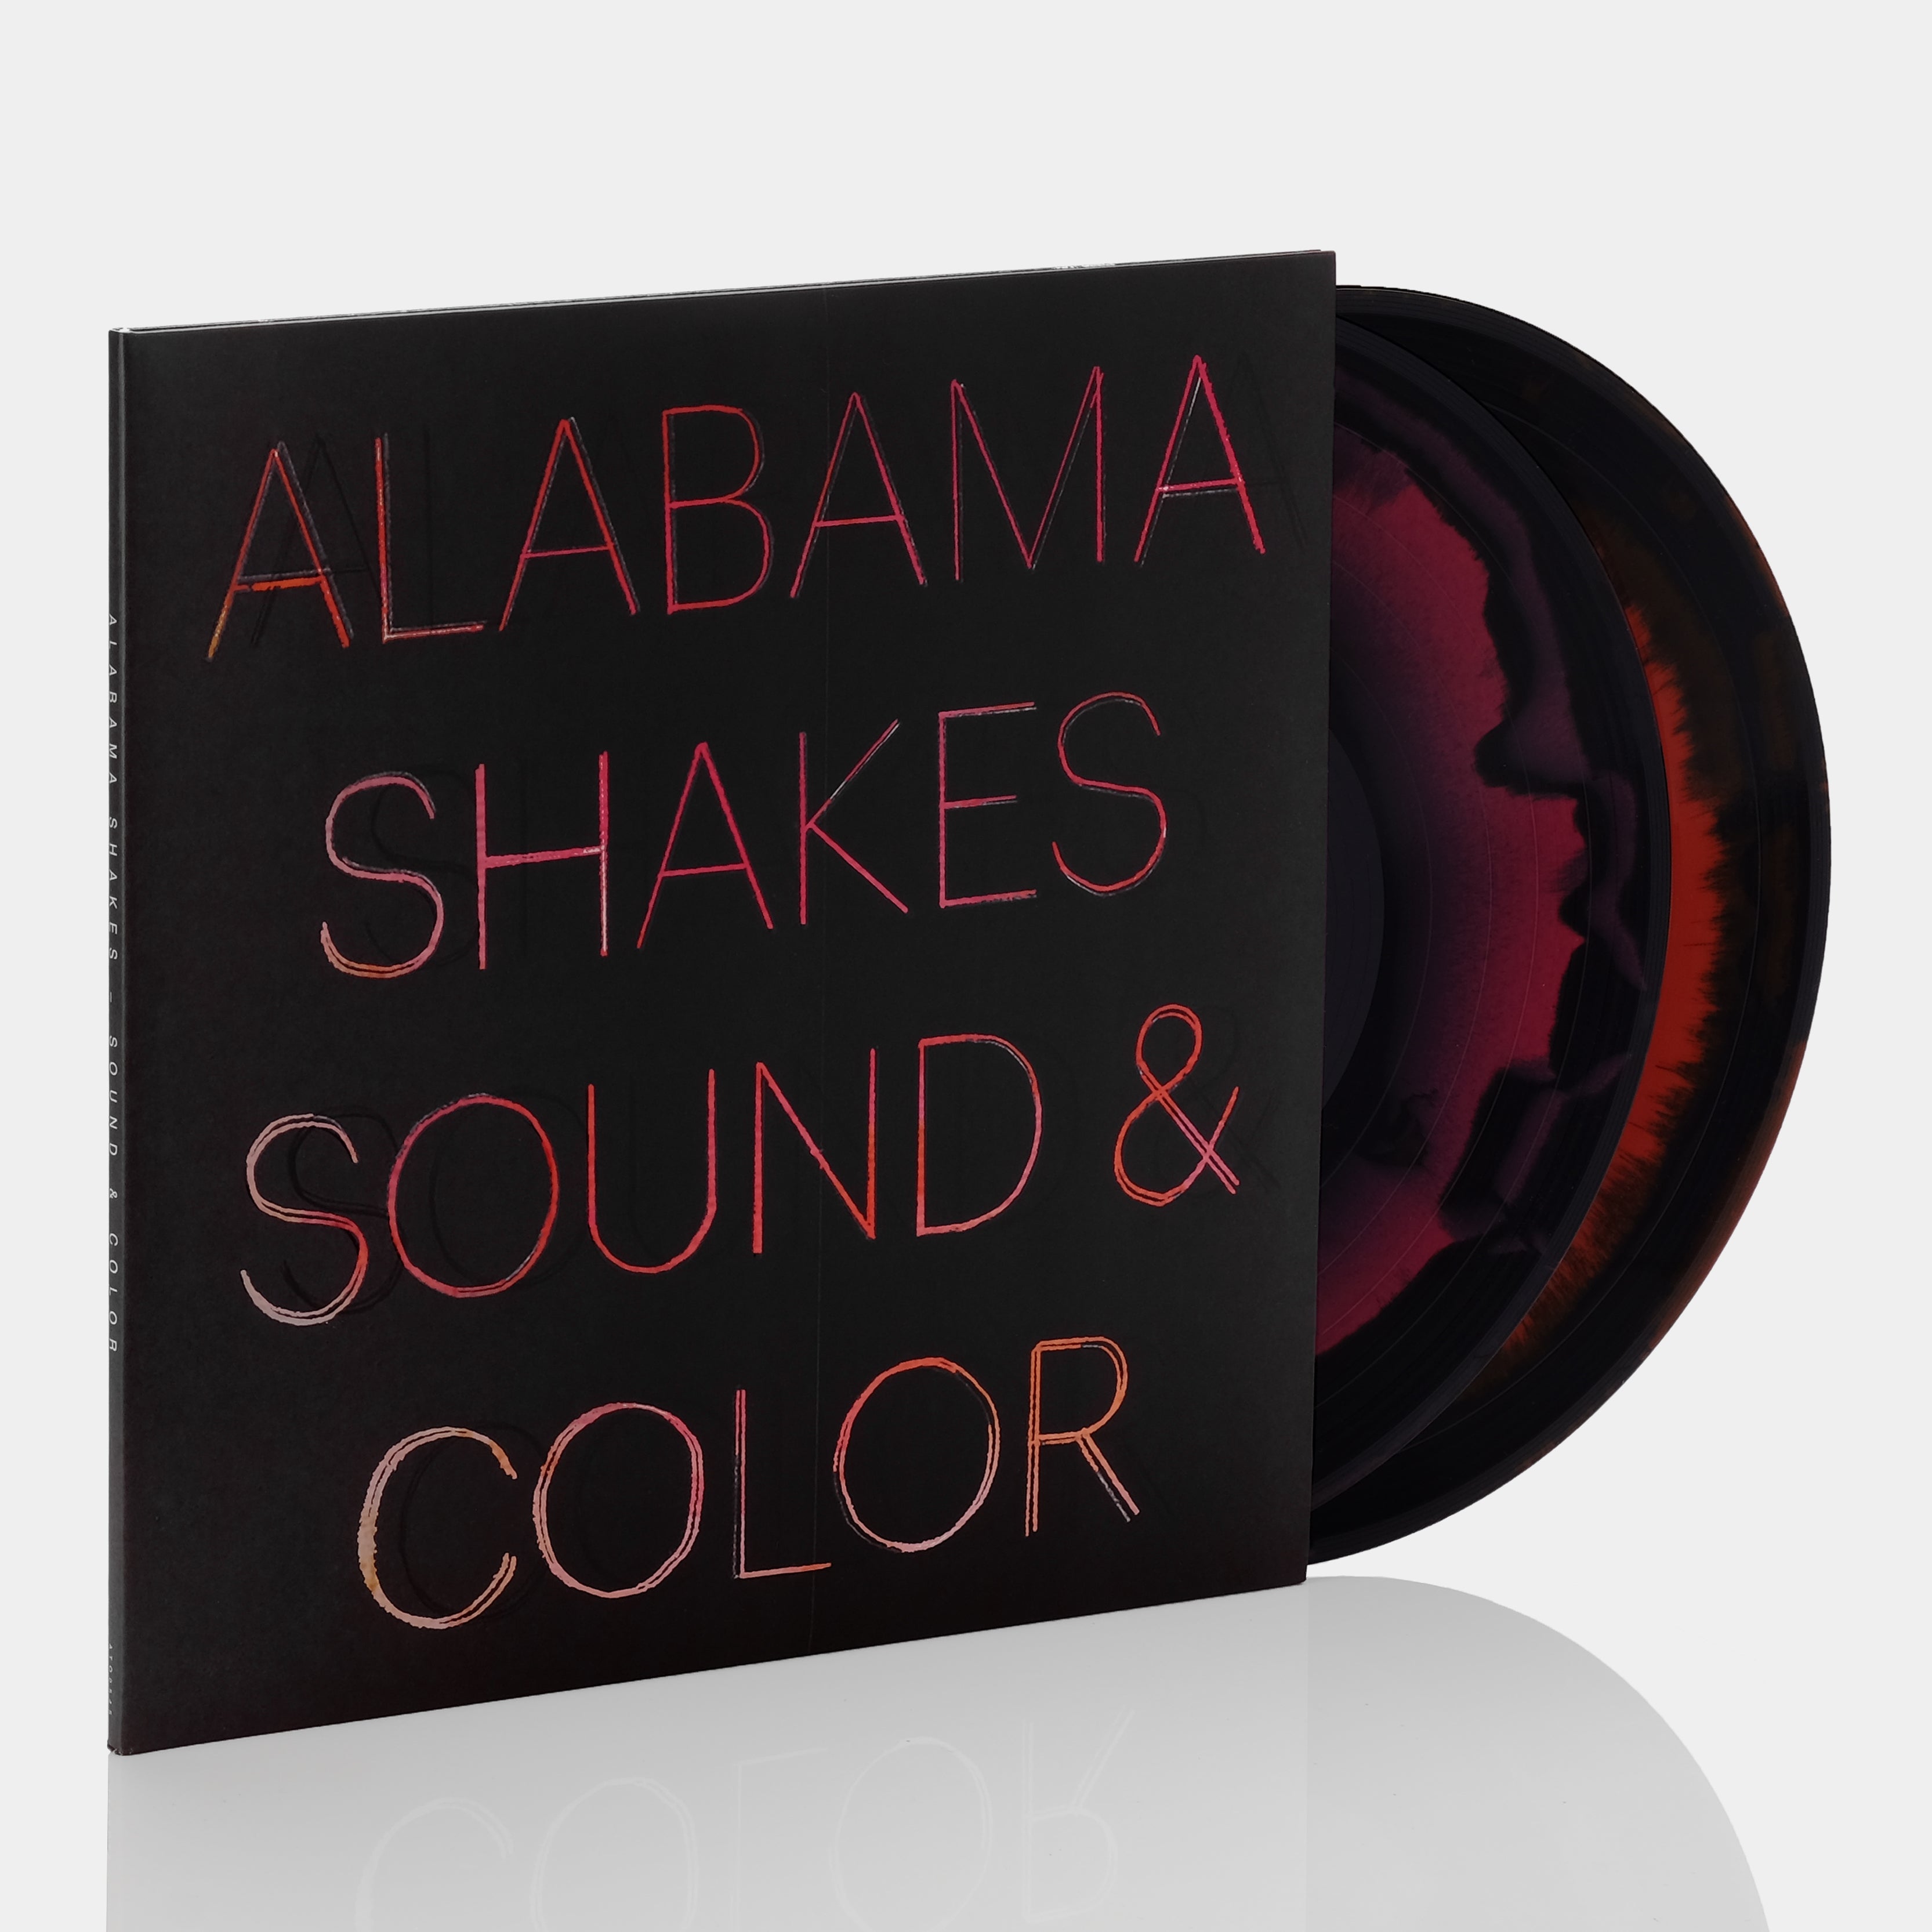 Alabama Shakes - Sound & Color (Deluxe Edition) 2xLP Red, Black & Pink Vinyl Record